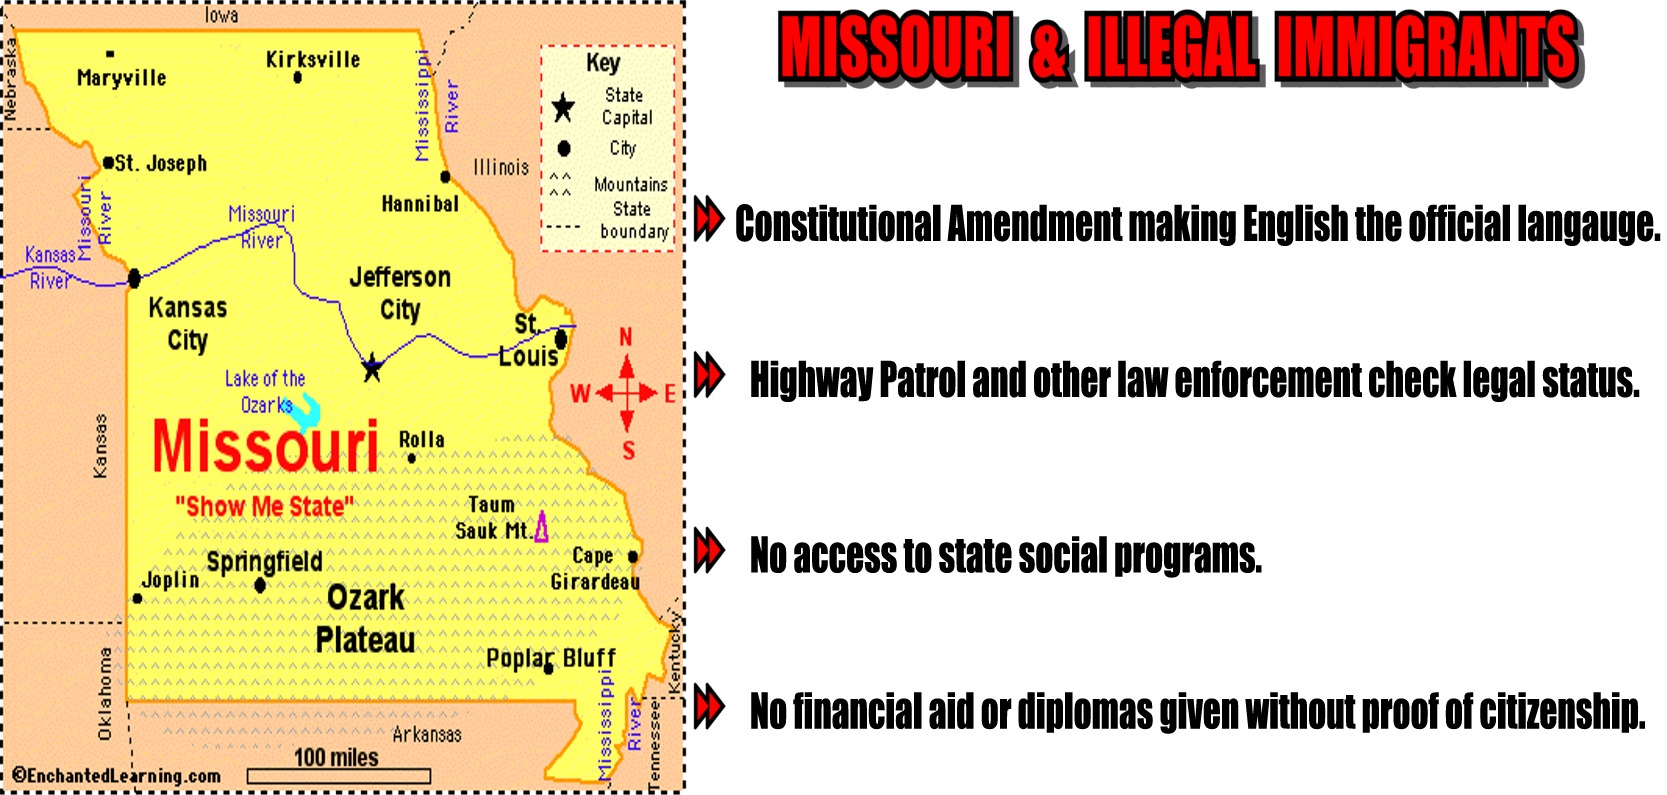 Missouri reports not having a large illegal alien problem.